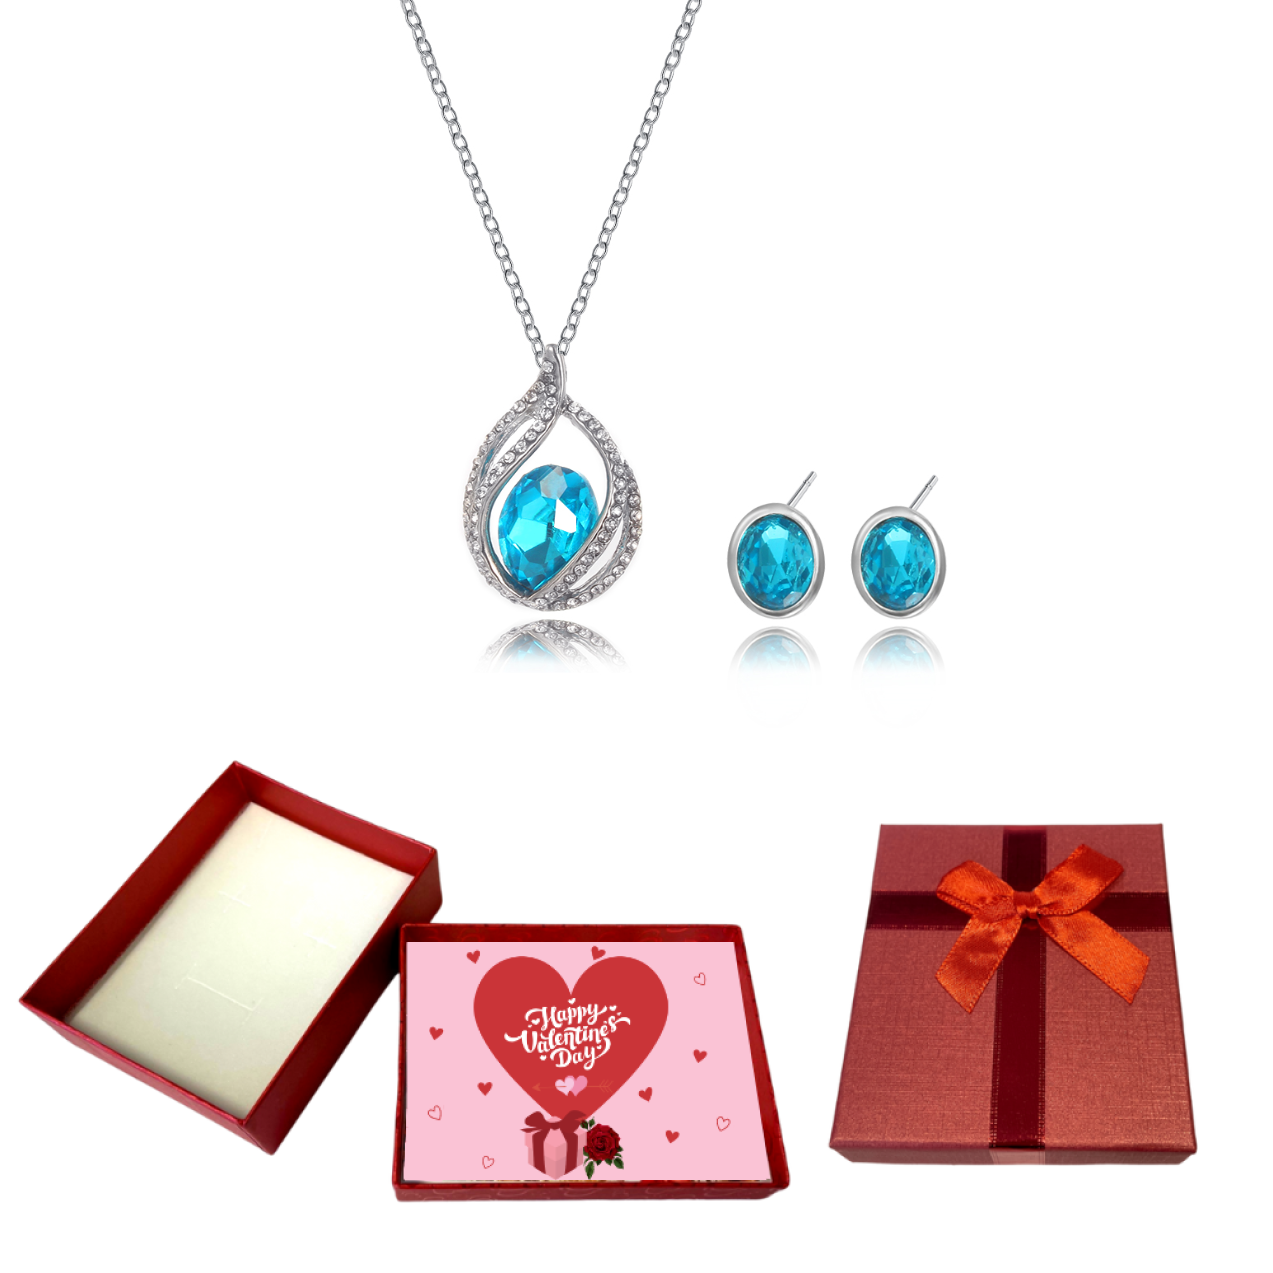 20 pcs - Sparkling Aqua Teardrop Pendant Necklace & Earrings Set With Valentine Gift Box - 10 Sets|GCJ165-Set -Valentine Box|UK SELLER